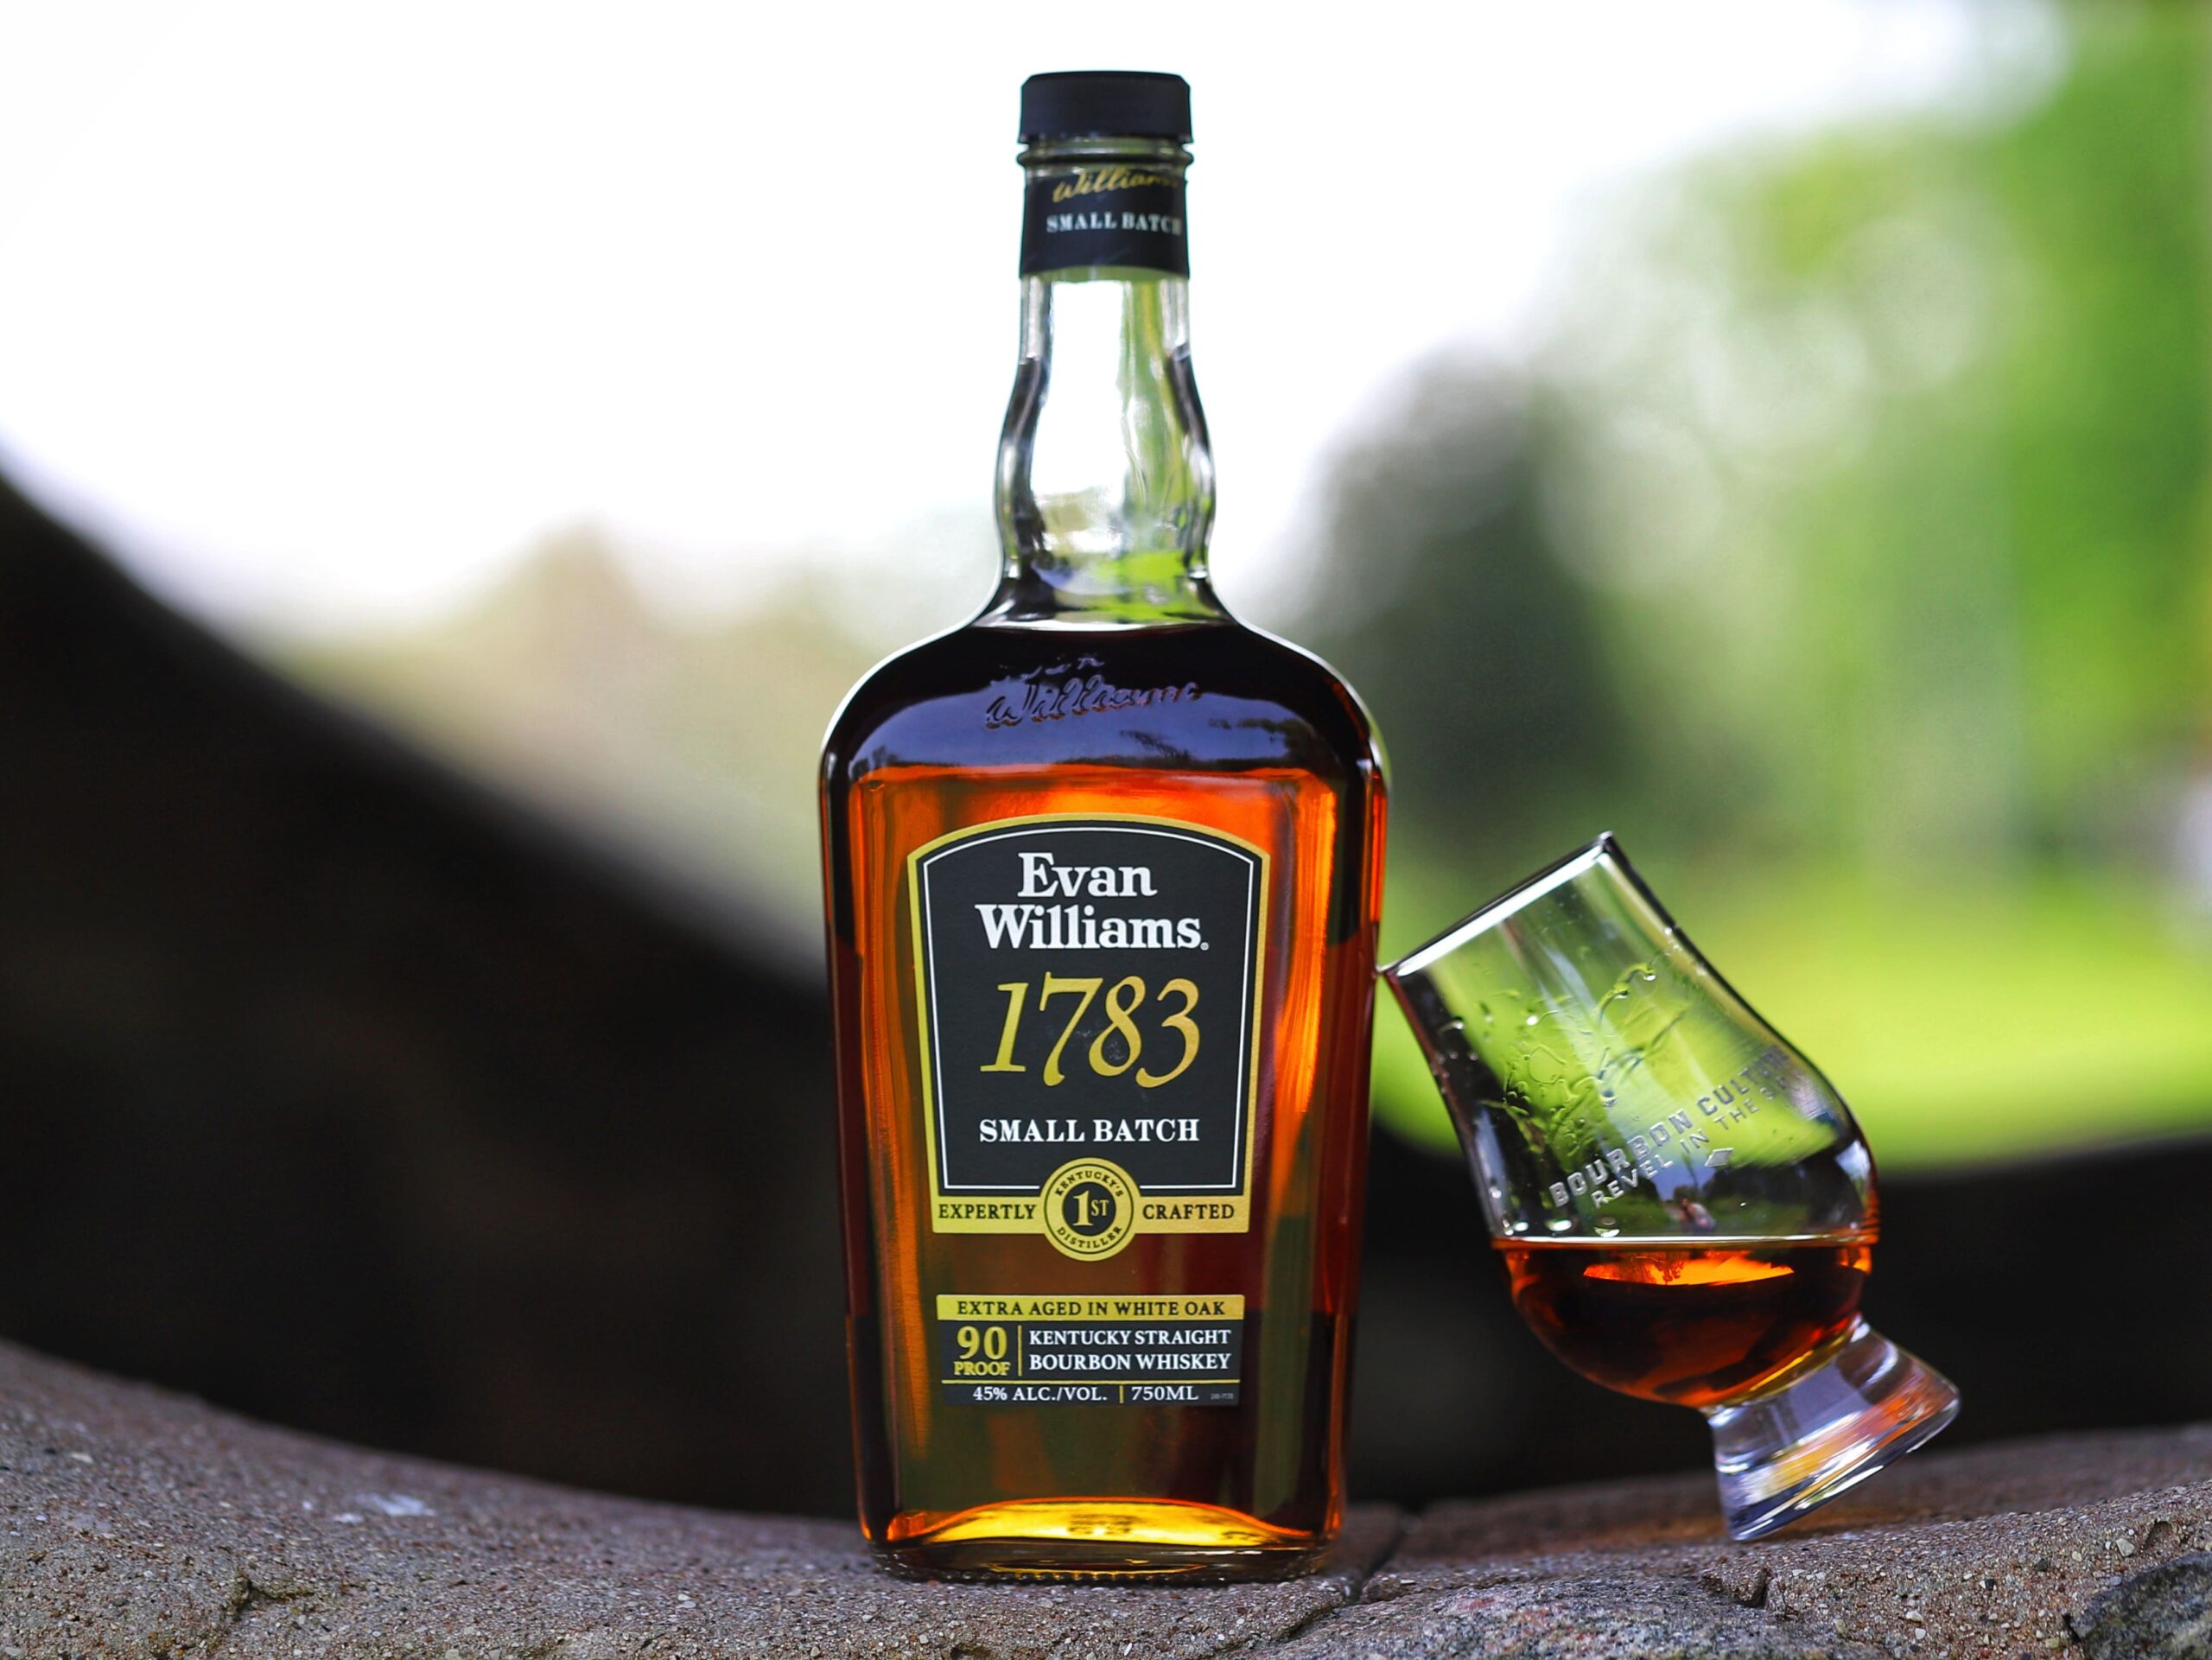 Evan Williams 1783 Small Batch Bourbon Review